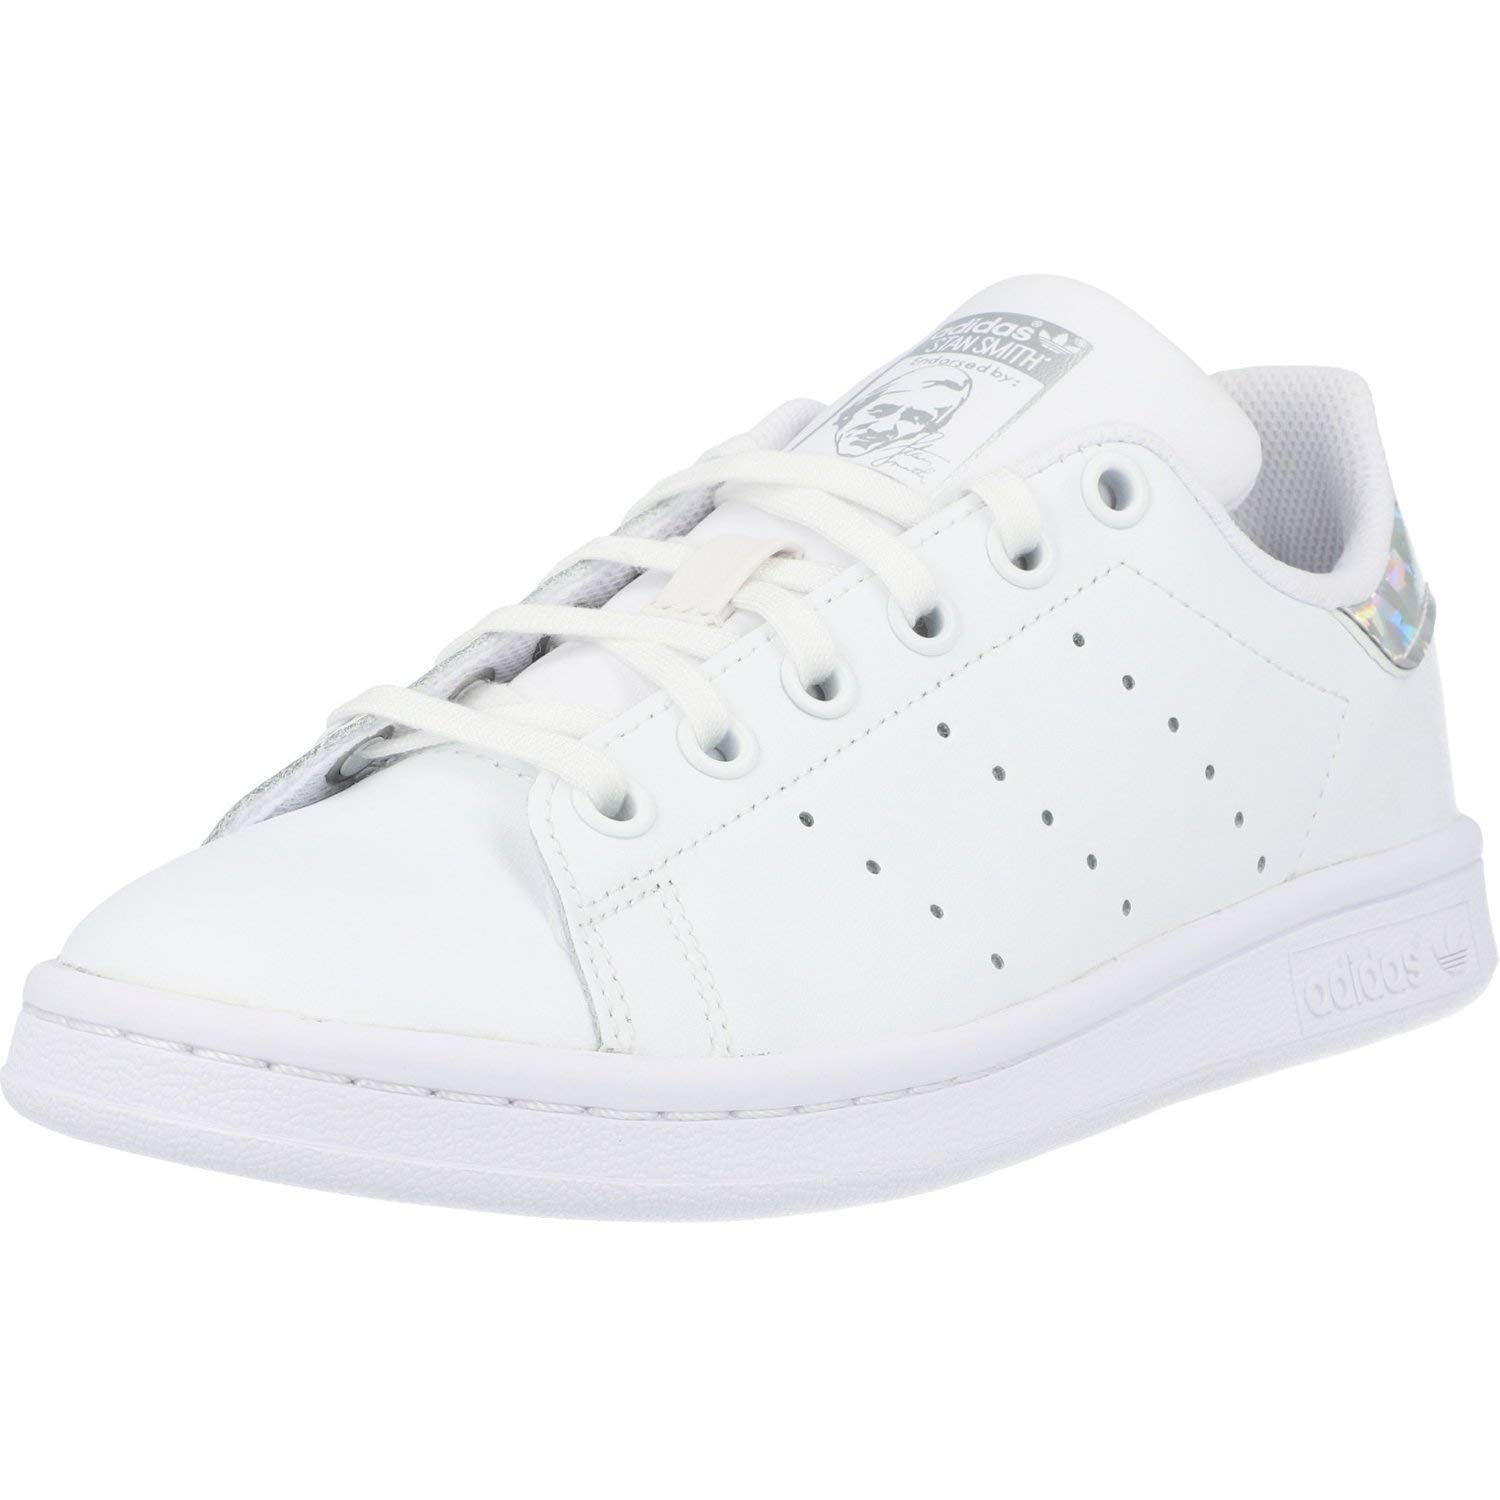 Adidas Unisex-Kinder Stan Smith J Sneaker, Weiß (White Ee8483), 38 EU